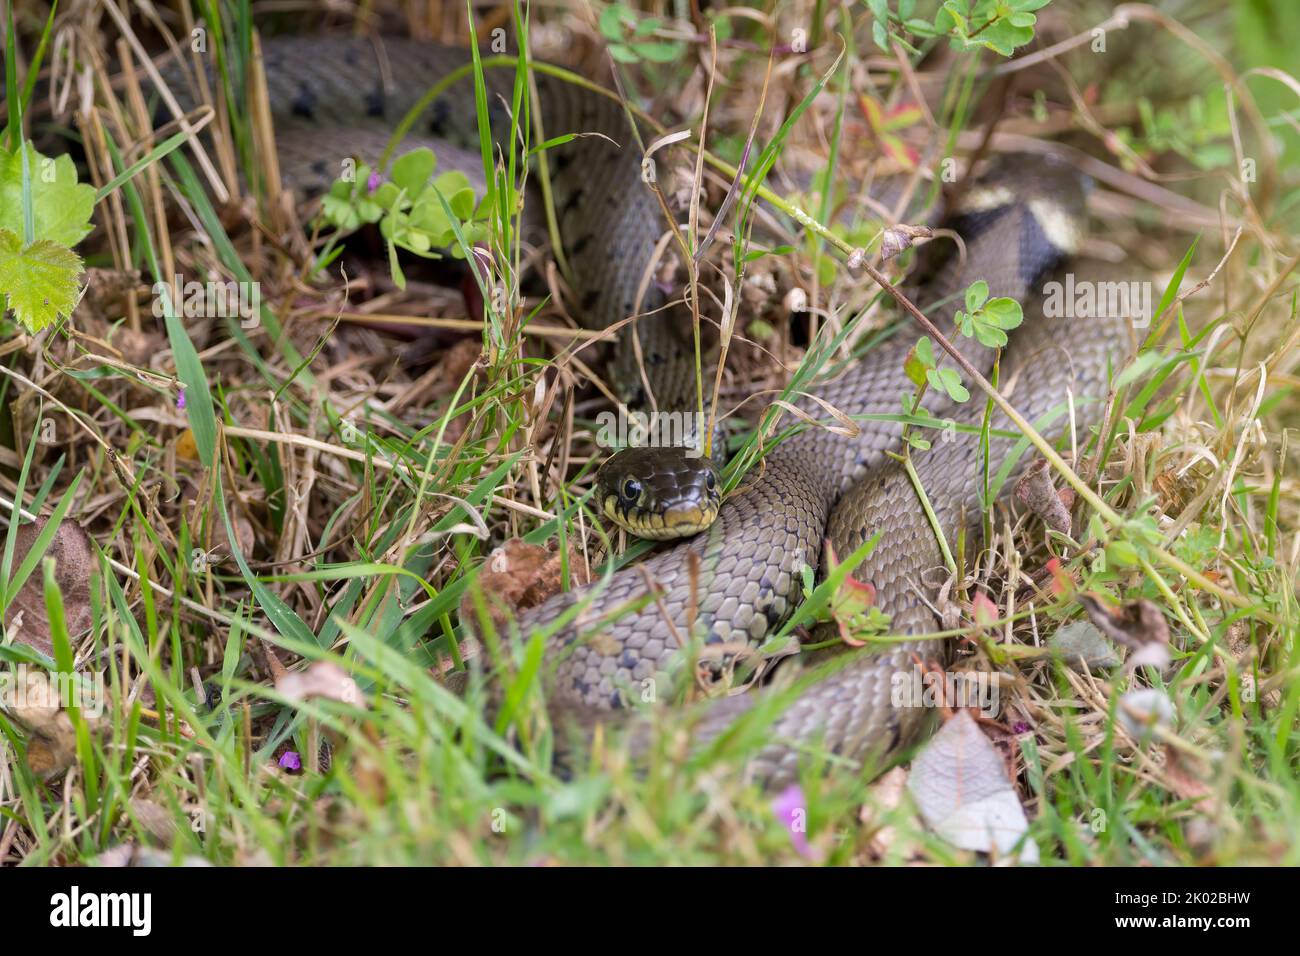 Grass snake (natrix natrix) long greenish body with dark markings along flanks a yellow neck collar and round pupils non venomous british resident Stock Photo